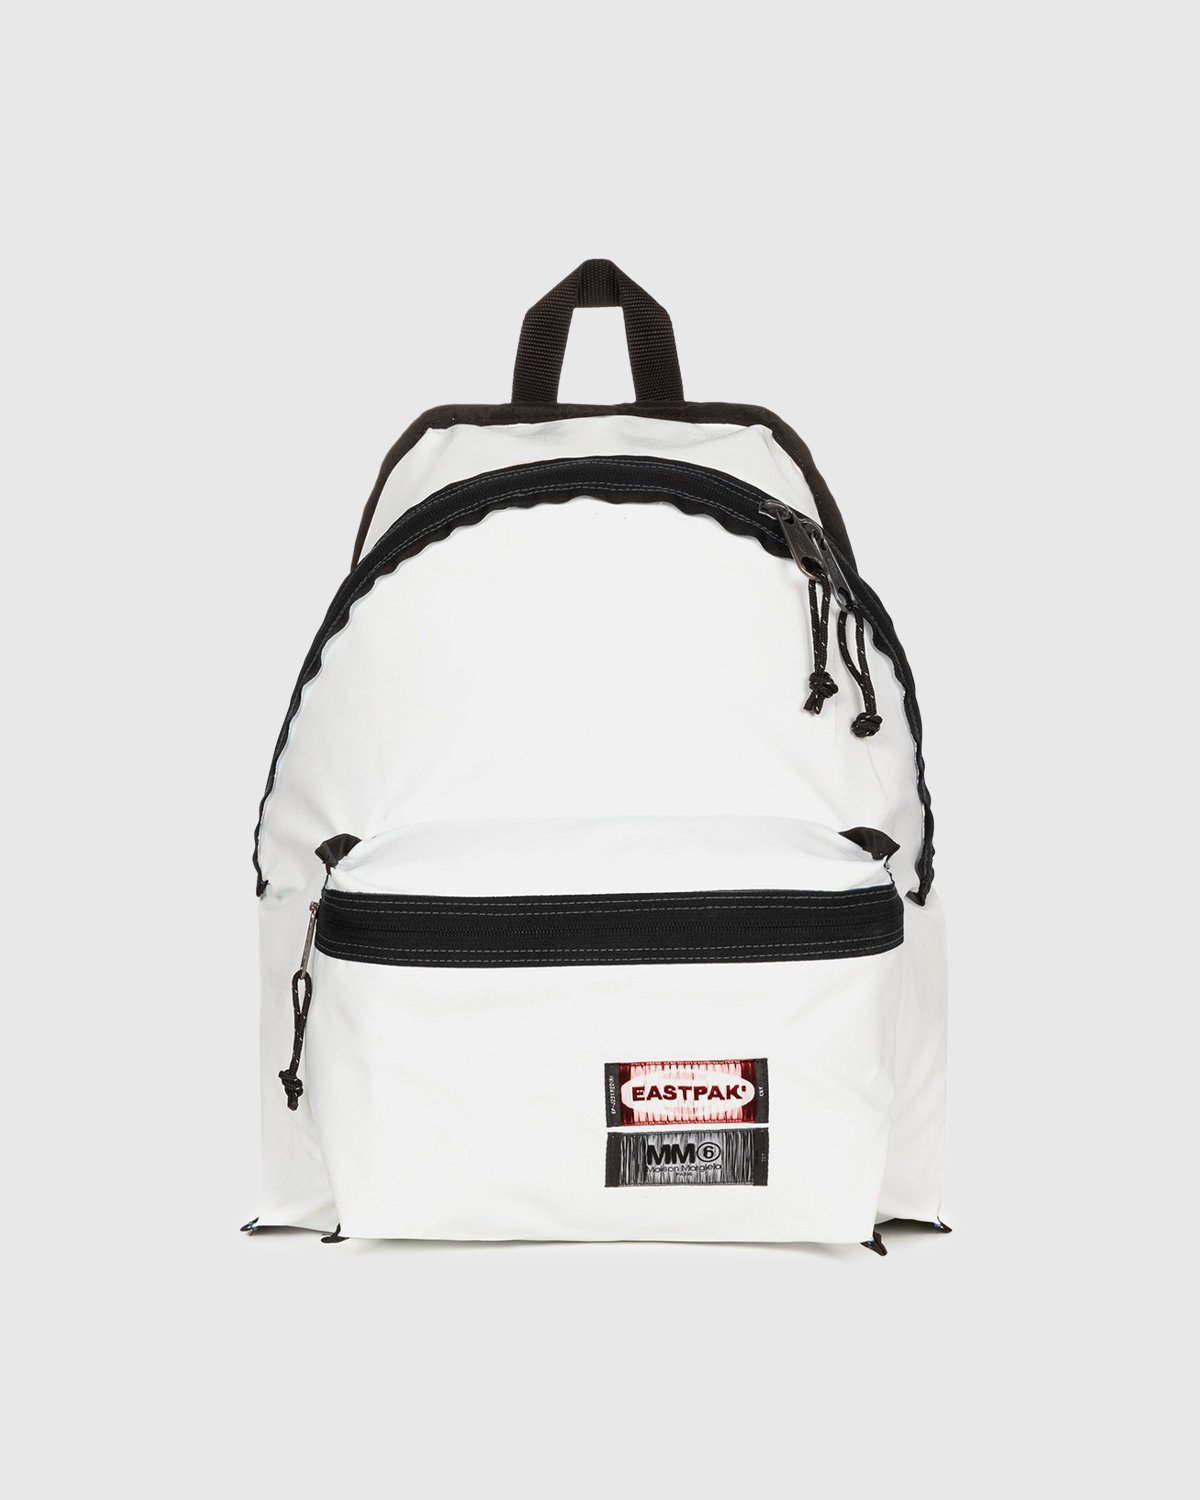 MM6 Maison Margiela x Eastpak - Padded Backpack Black - Accessories - Black - Image 4